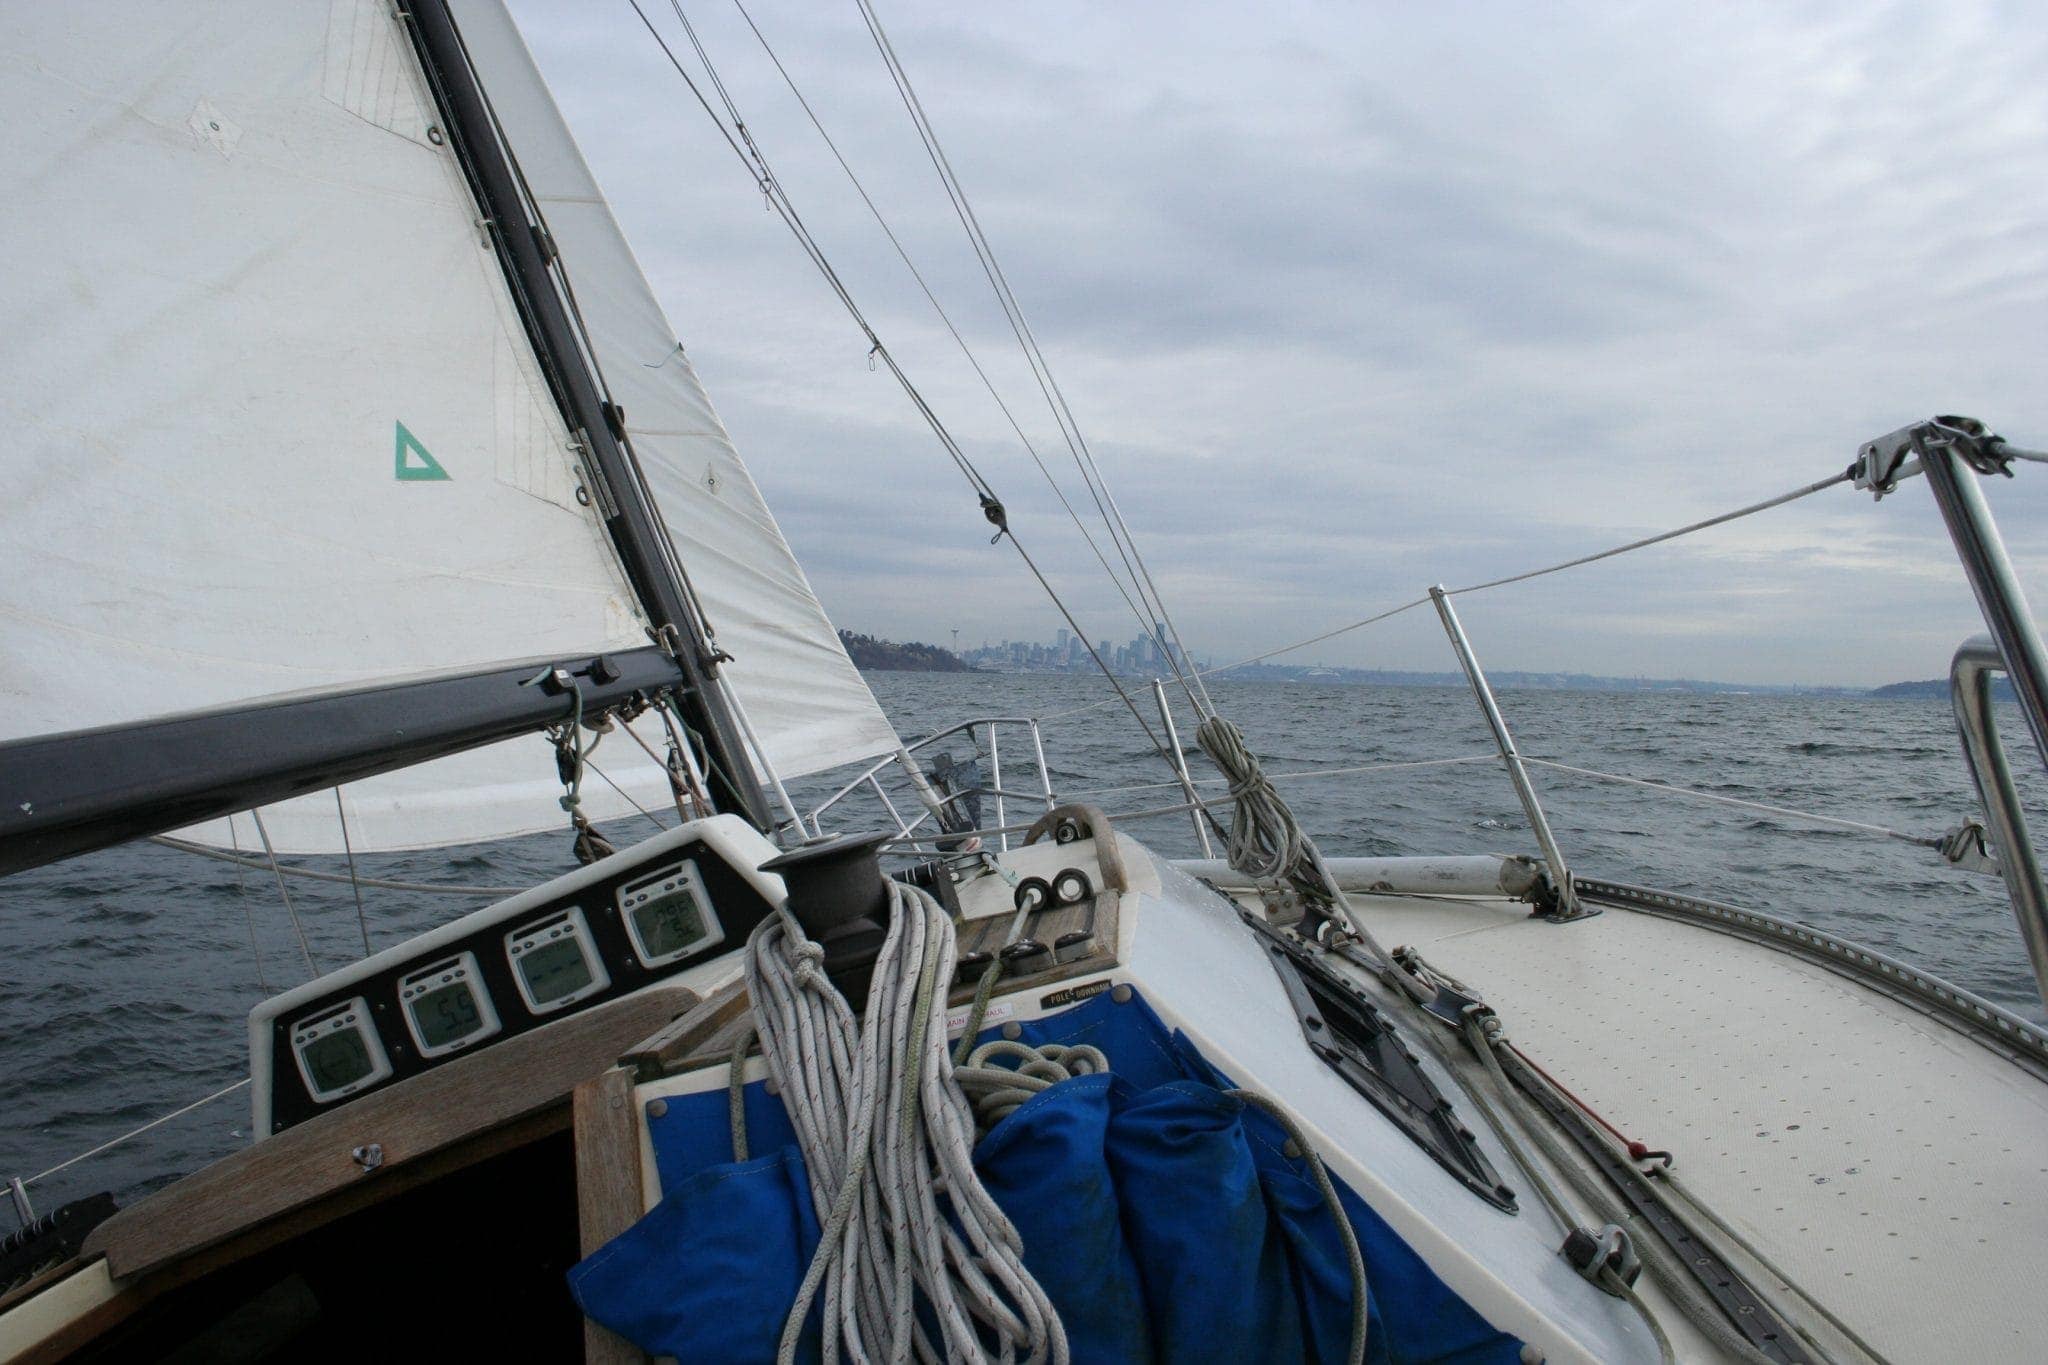 Sailing ... slightly cold but still nice